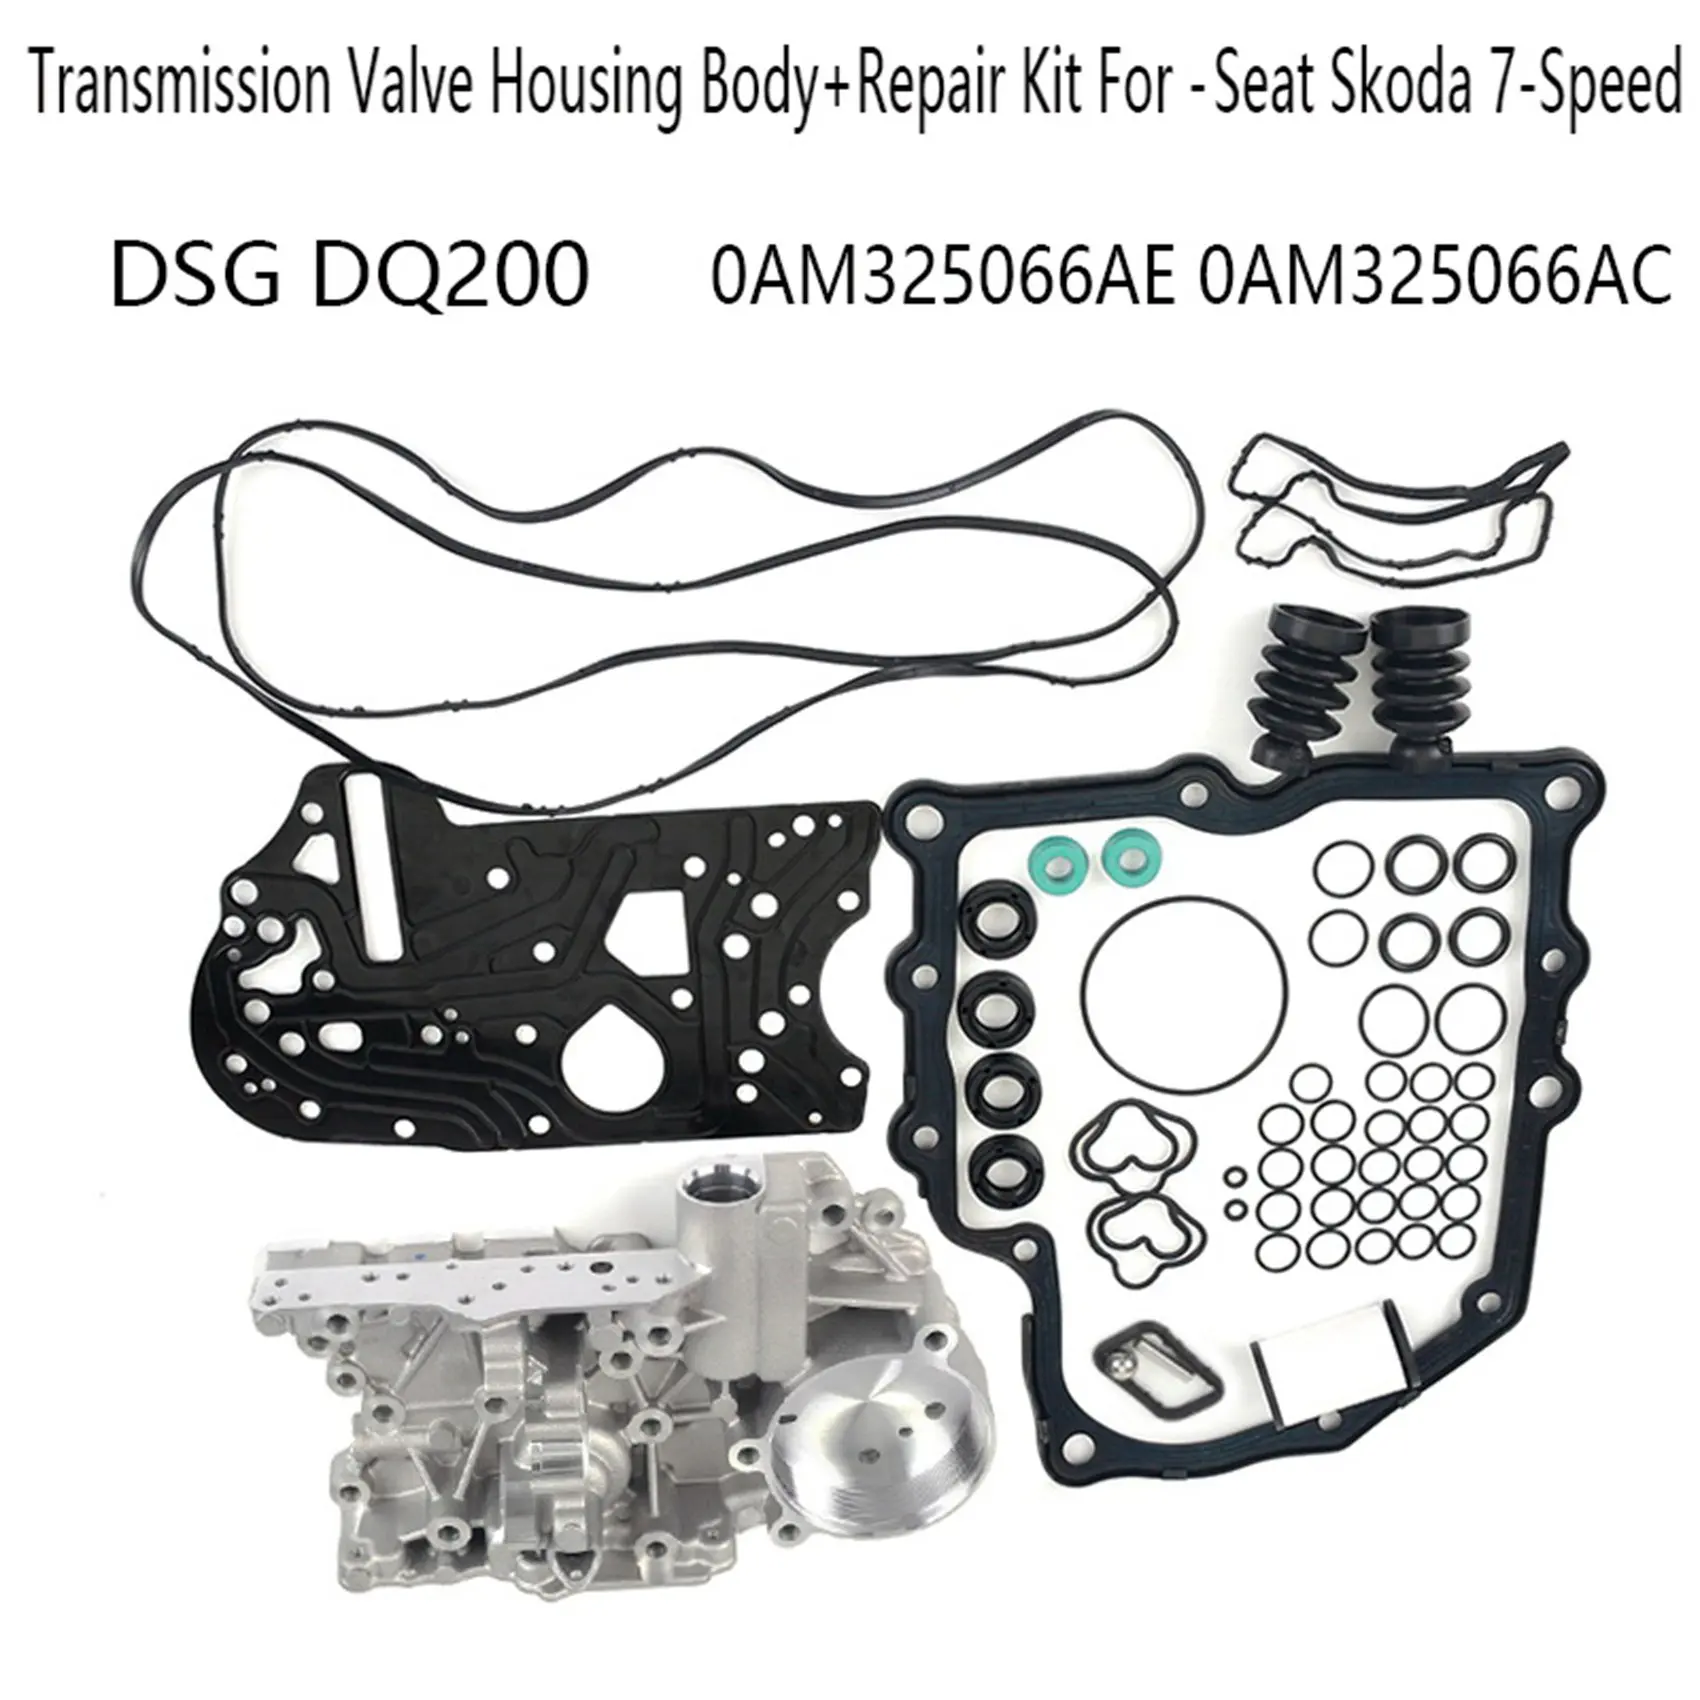 

Корпус клапана коробки передач DSG DQ200 + комплект для ремонта для Audi Seat Skoda 7-Speed 0AM325066AE 0AM325066AC